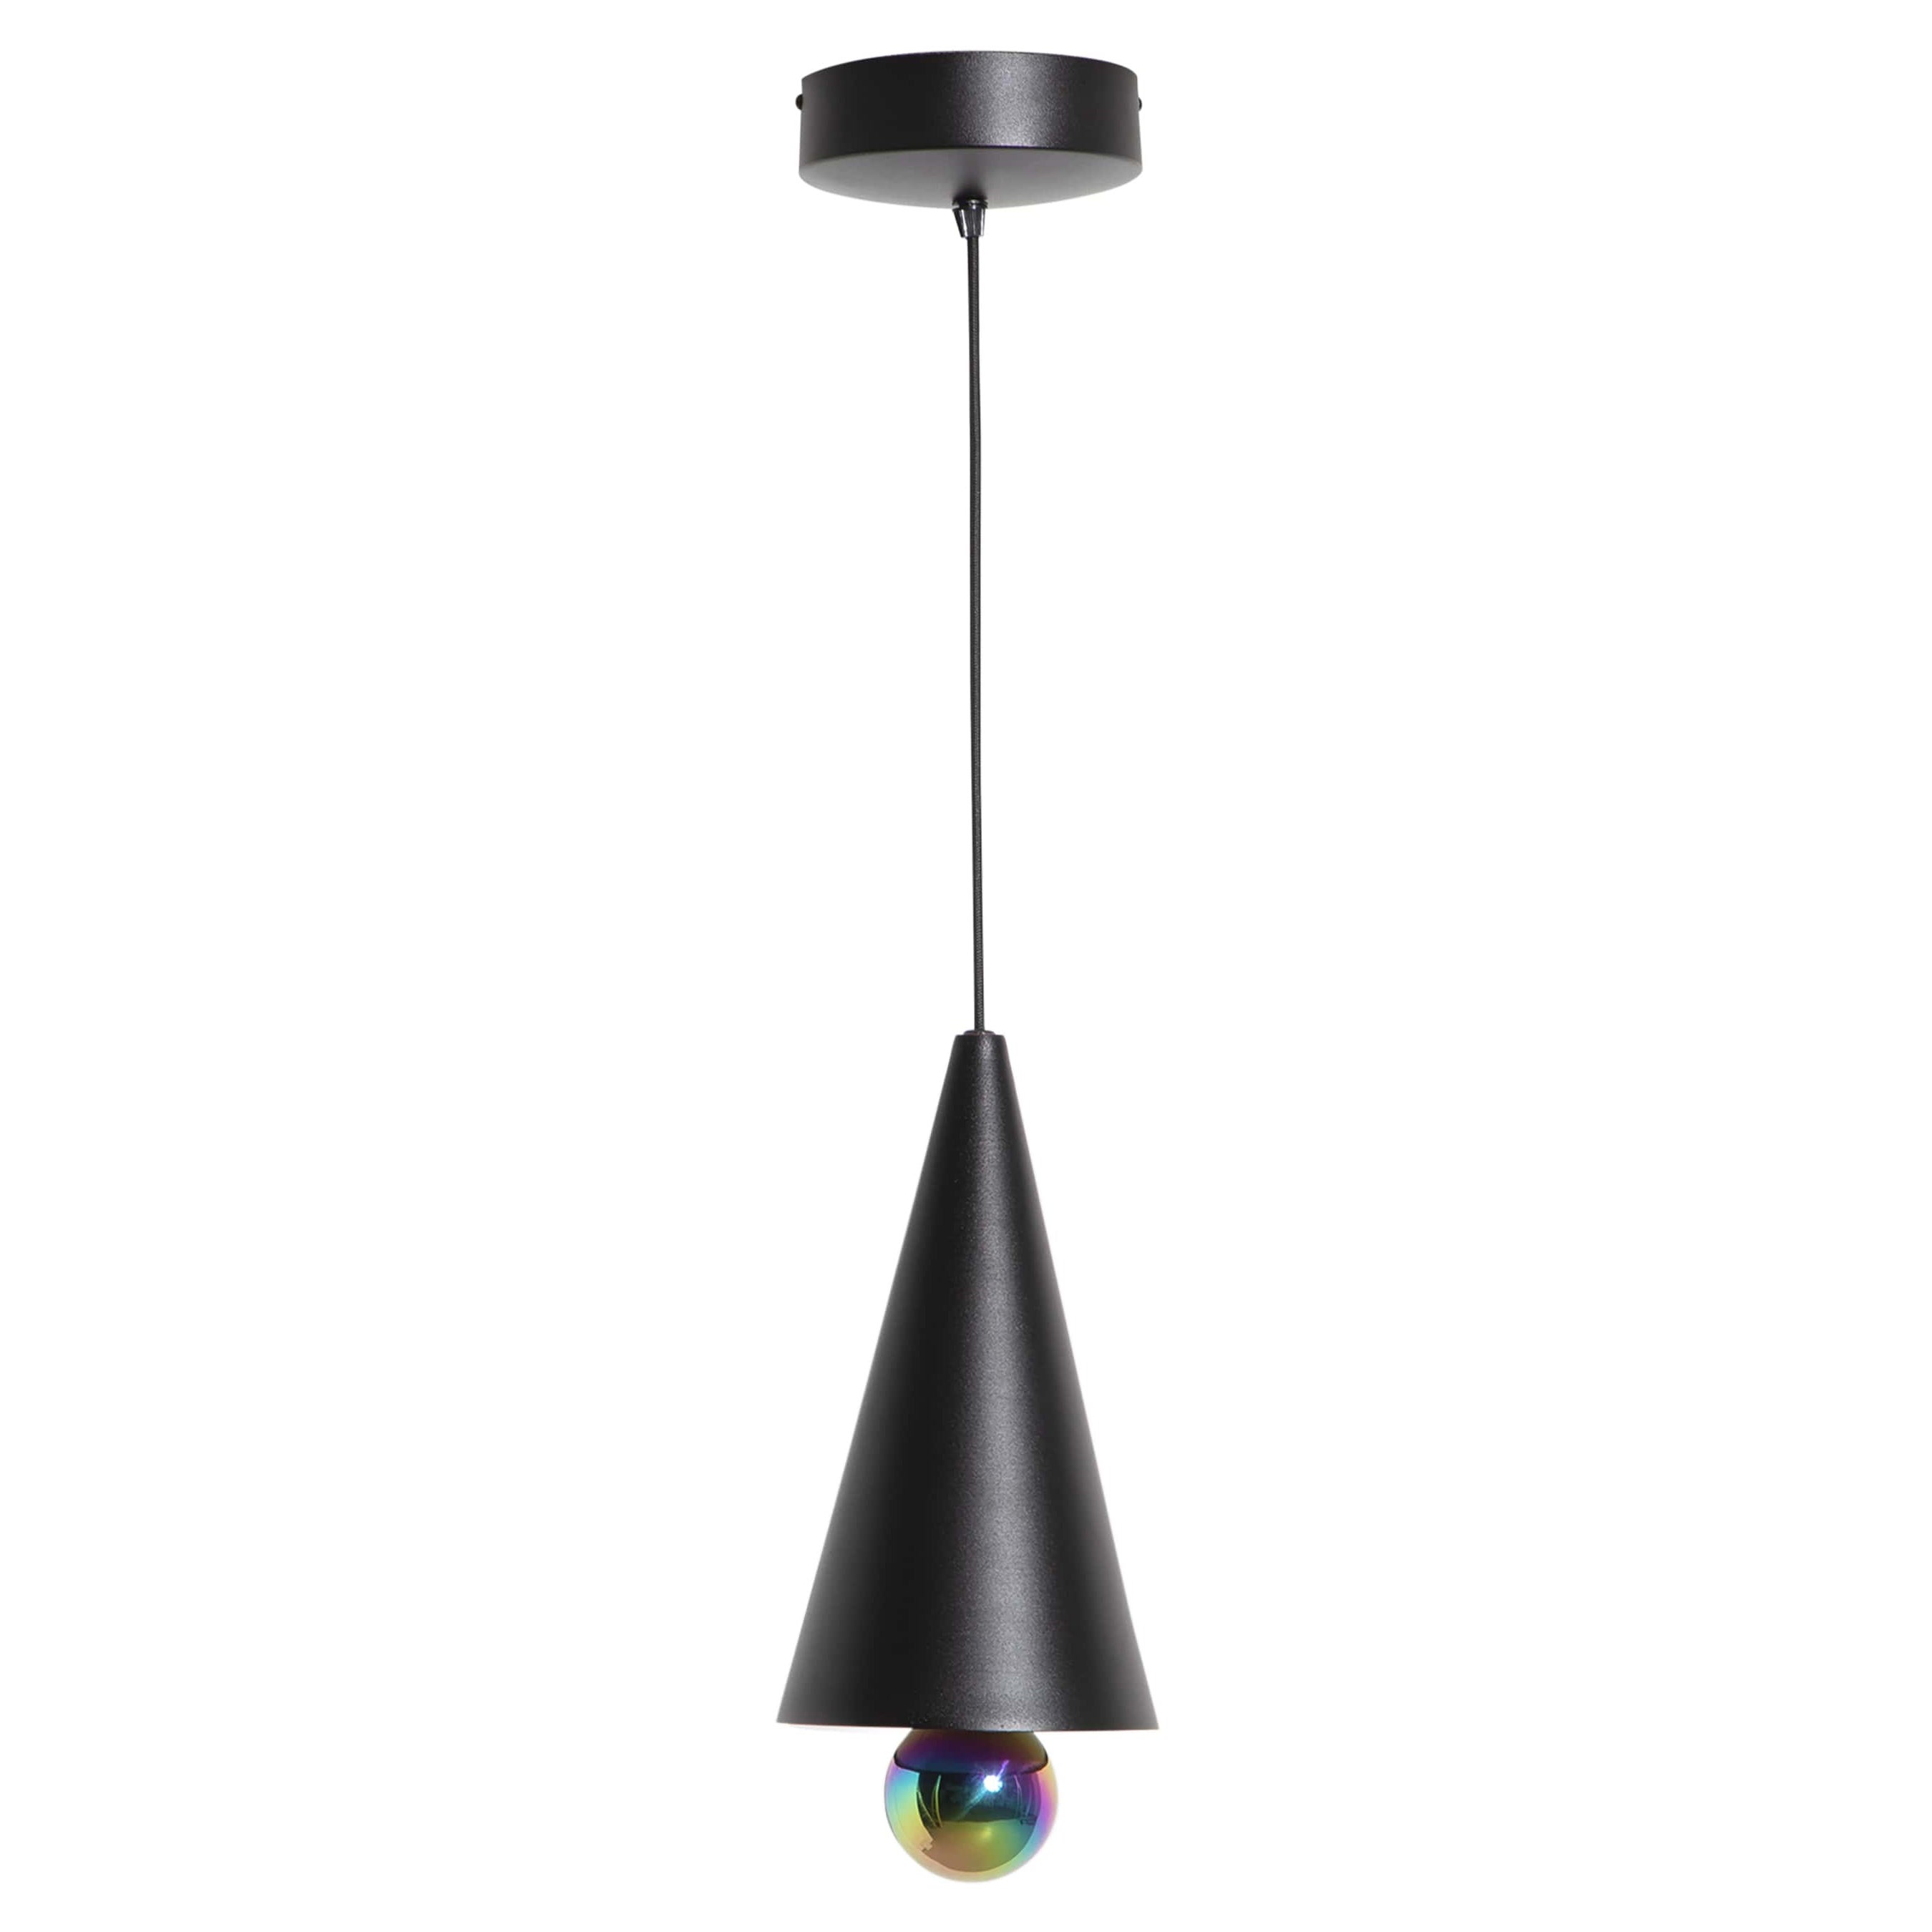 Petite Friture Small Cherry LED Pendant Light in Black and Rainbow Aluminium For Sale